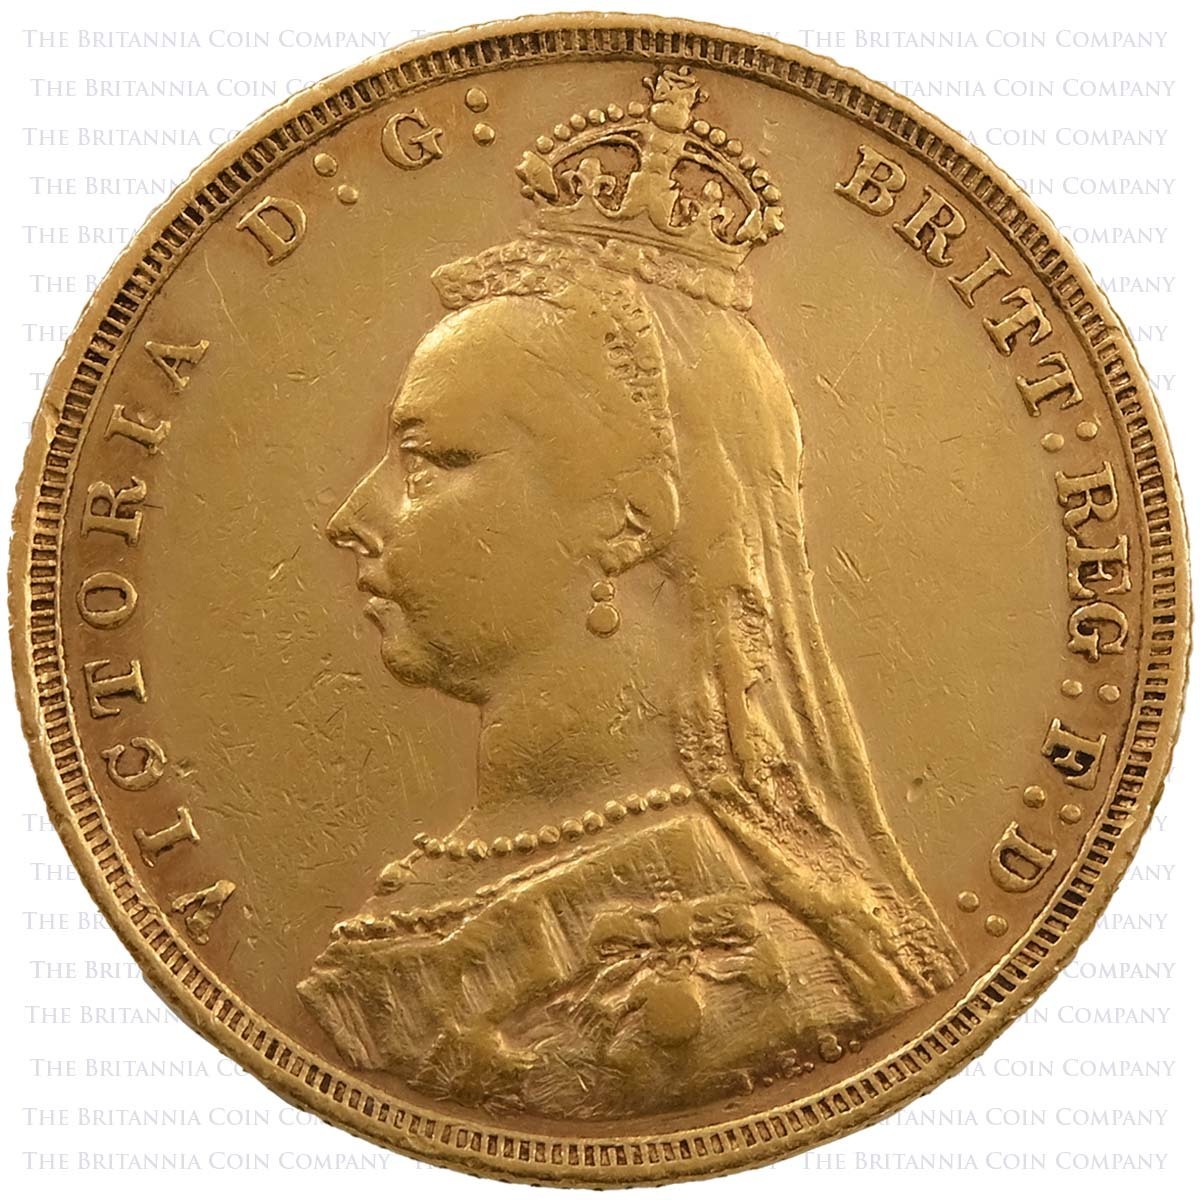 1892 Queen Victoria Gold Full Sovereign Coin Jubilee Head Sydney Mint Australia Obverse